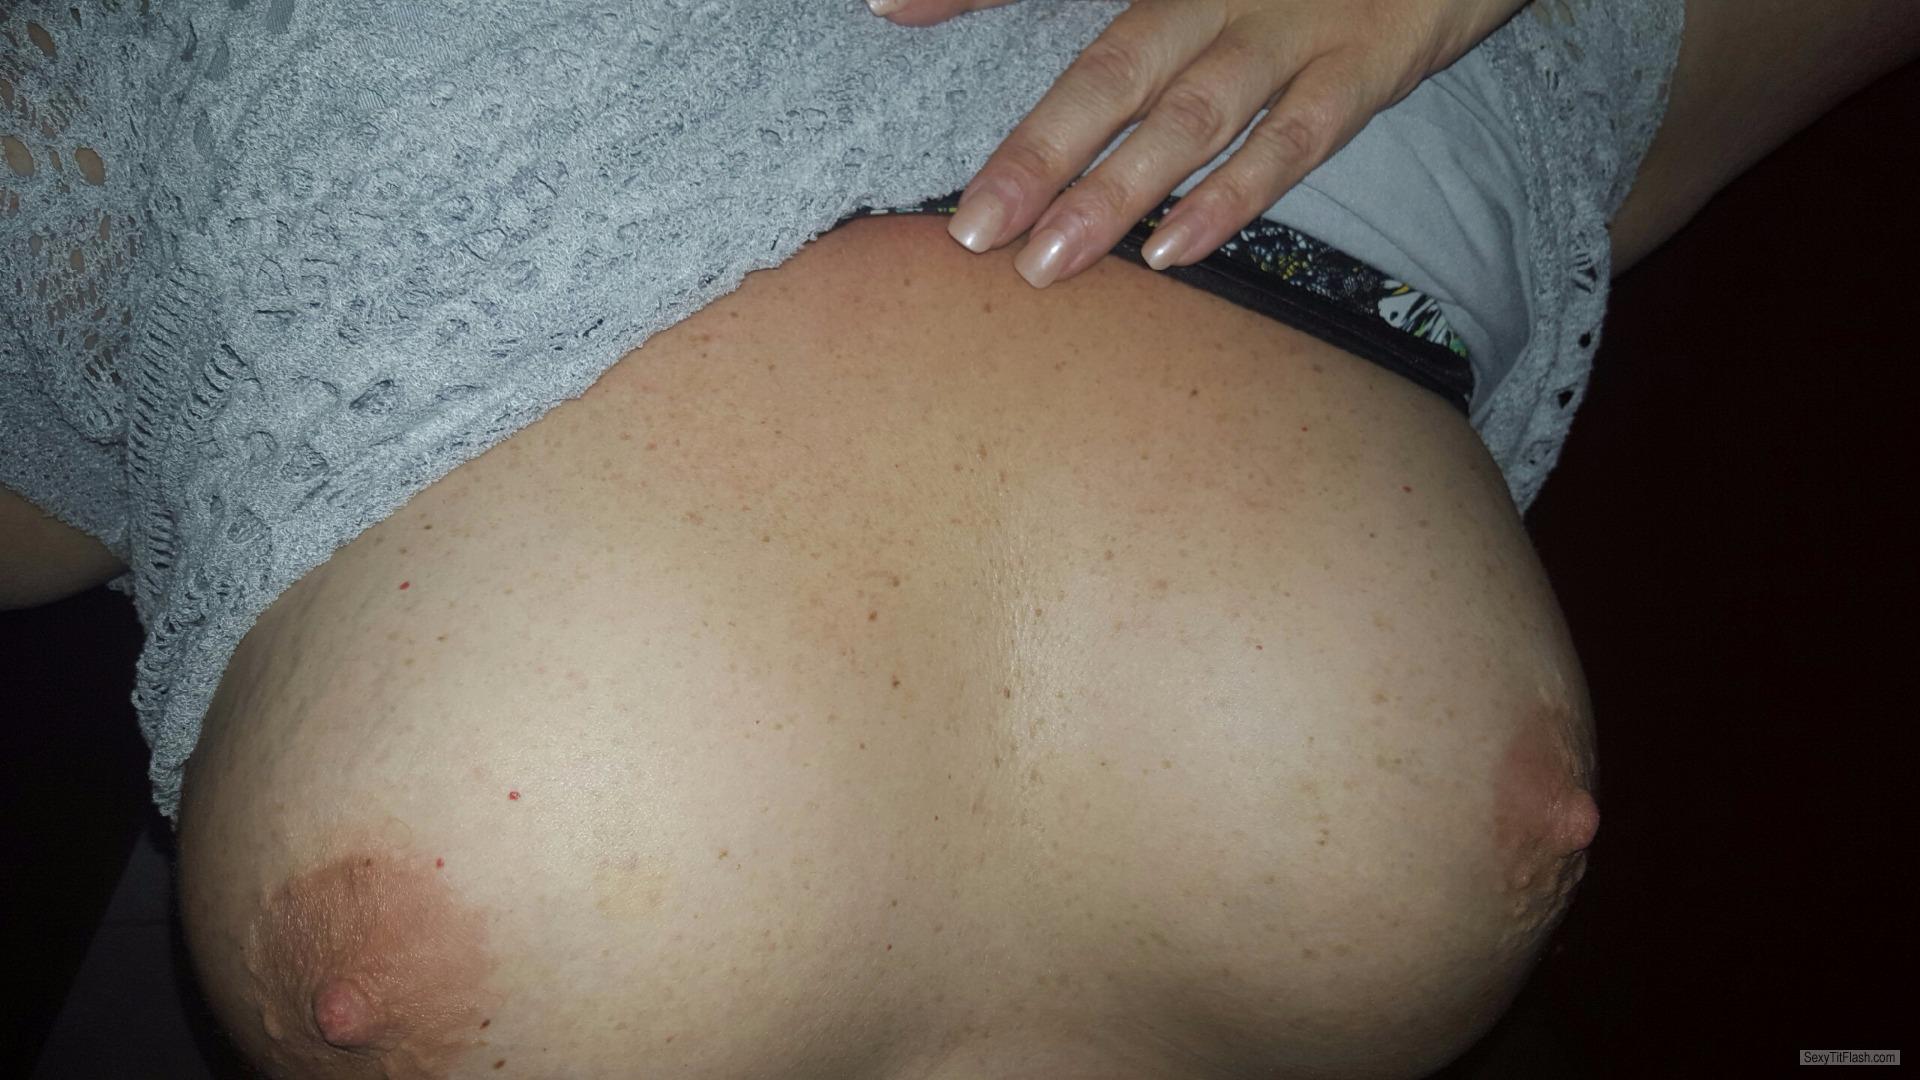 Tit Flash: My Big Tits (Selfie) - Mandee from United States